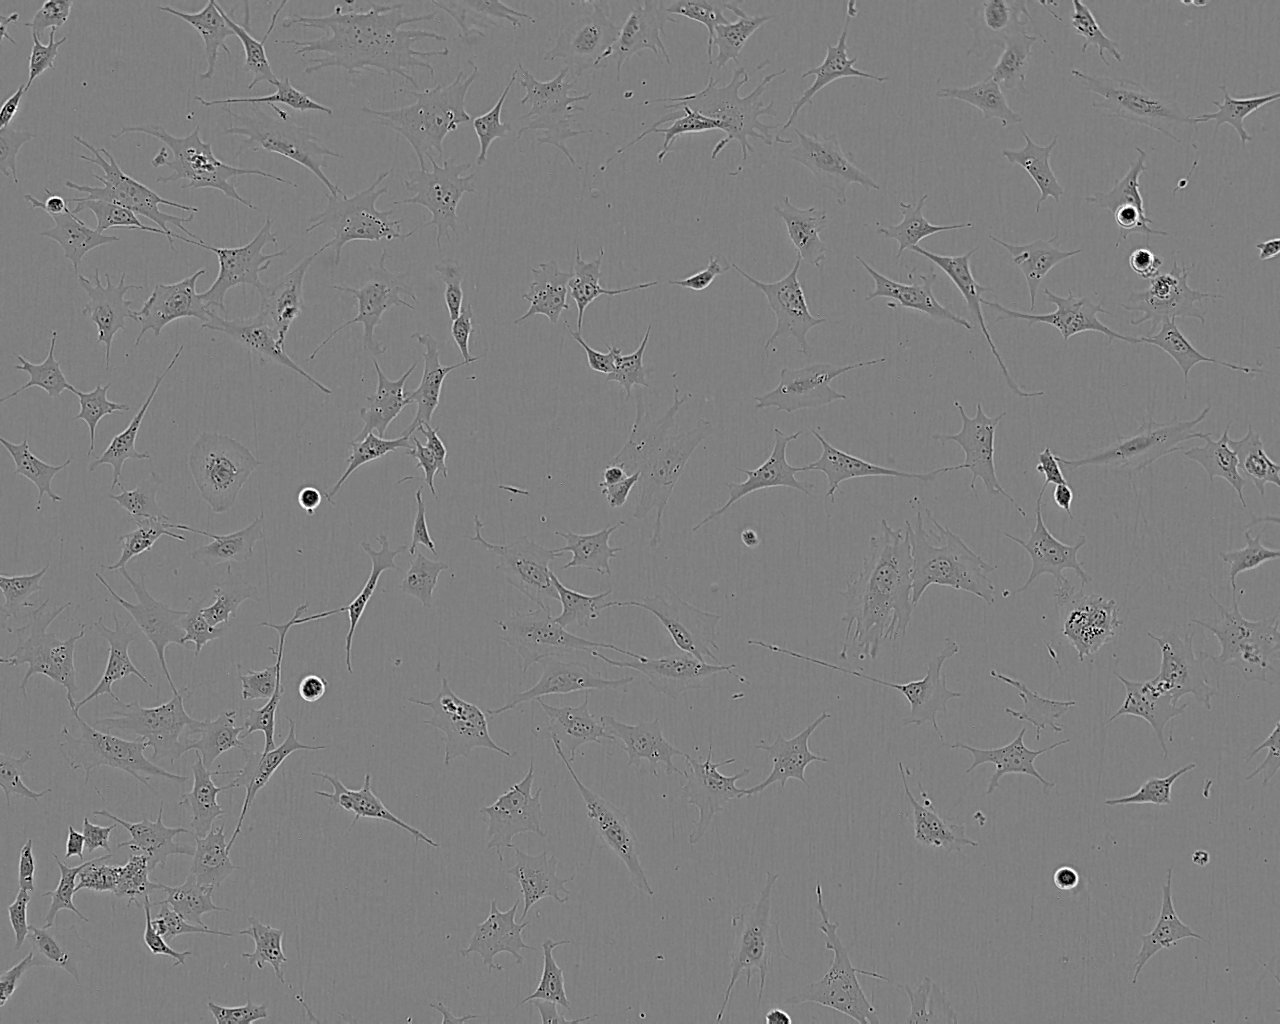 NCI-H2106 Epithelial Cell|人非小细胞肺癌传代细胞(有STR鉴定)